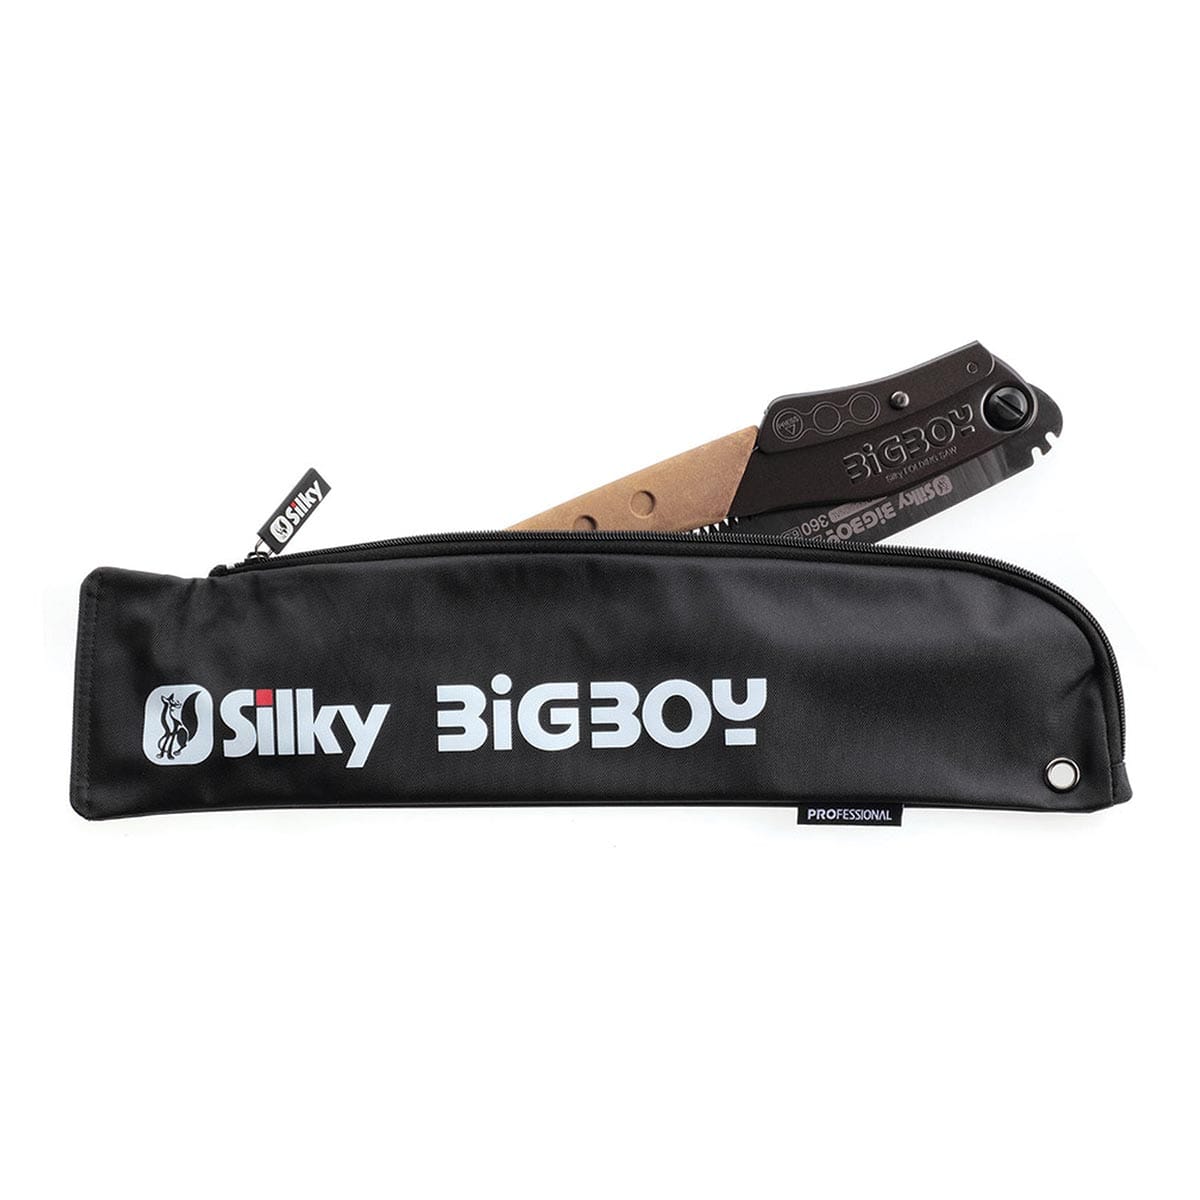 Silky Bigboy Professional 2000 (360 mm) Outback Edition